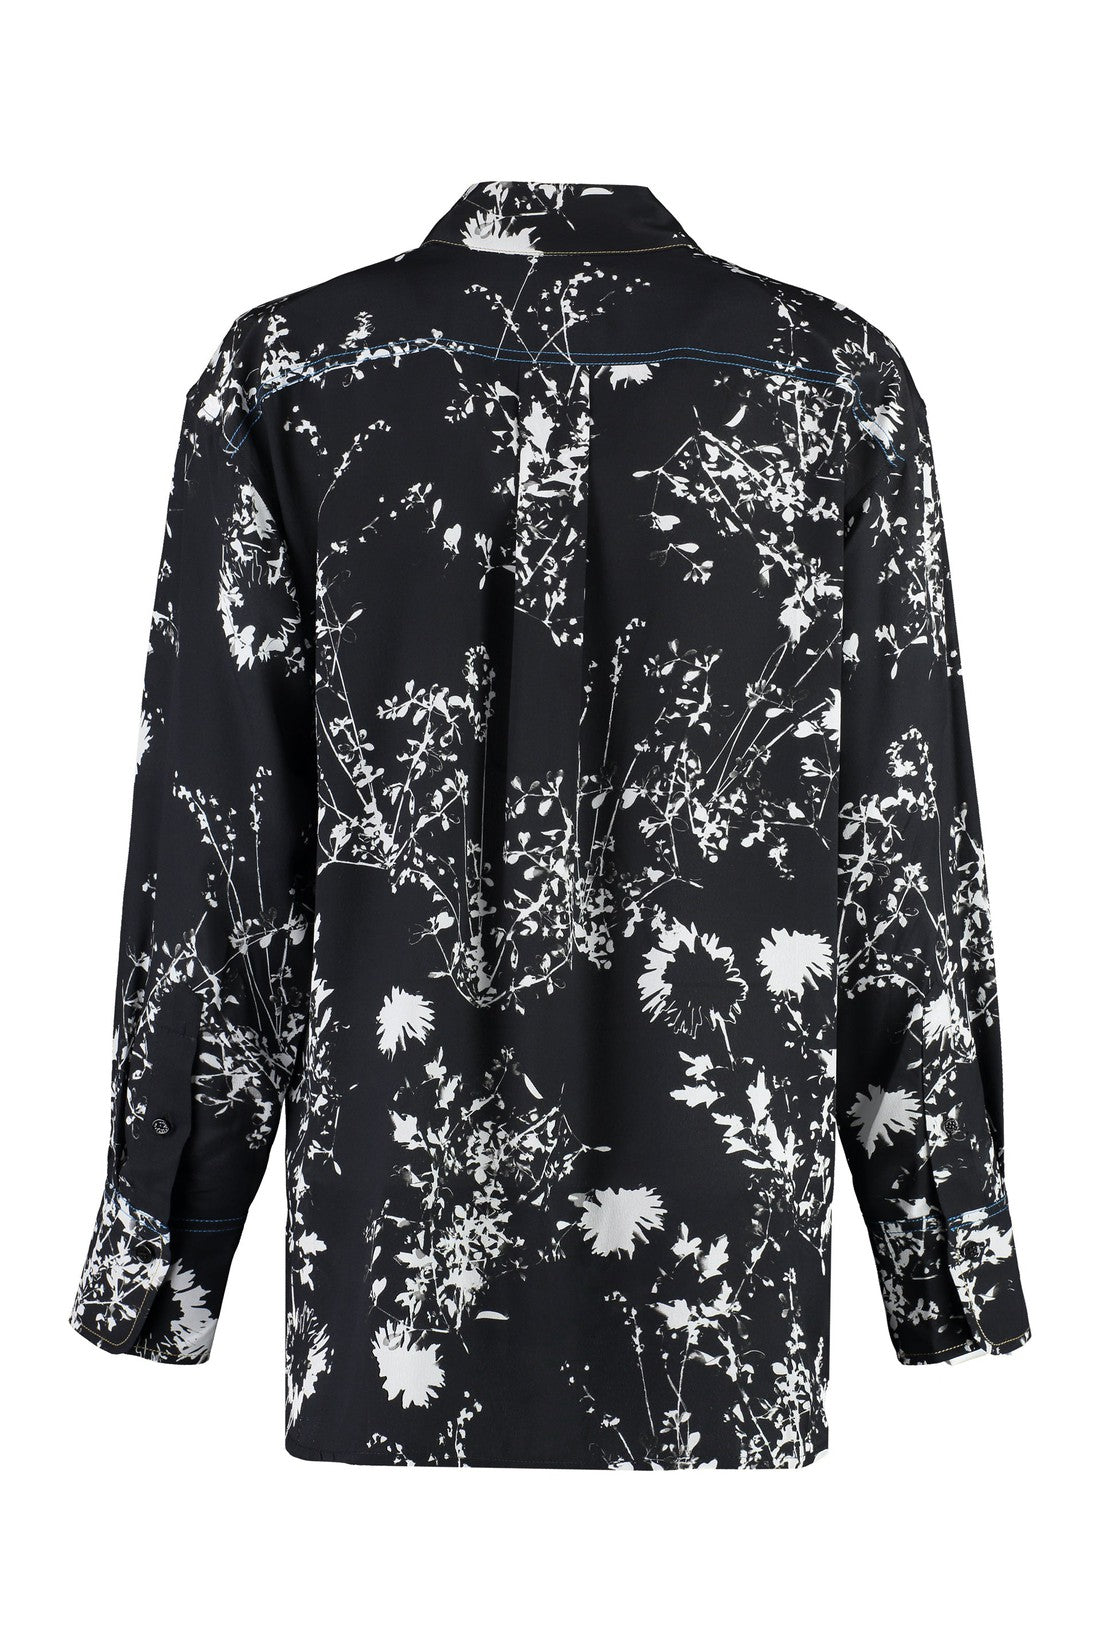 Victoria Beckham-OUTLET-SALE-Printed silk shirt-ARCHIVIST